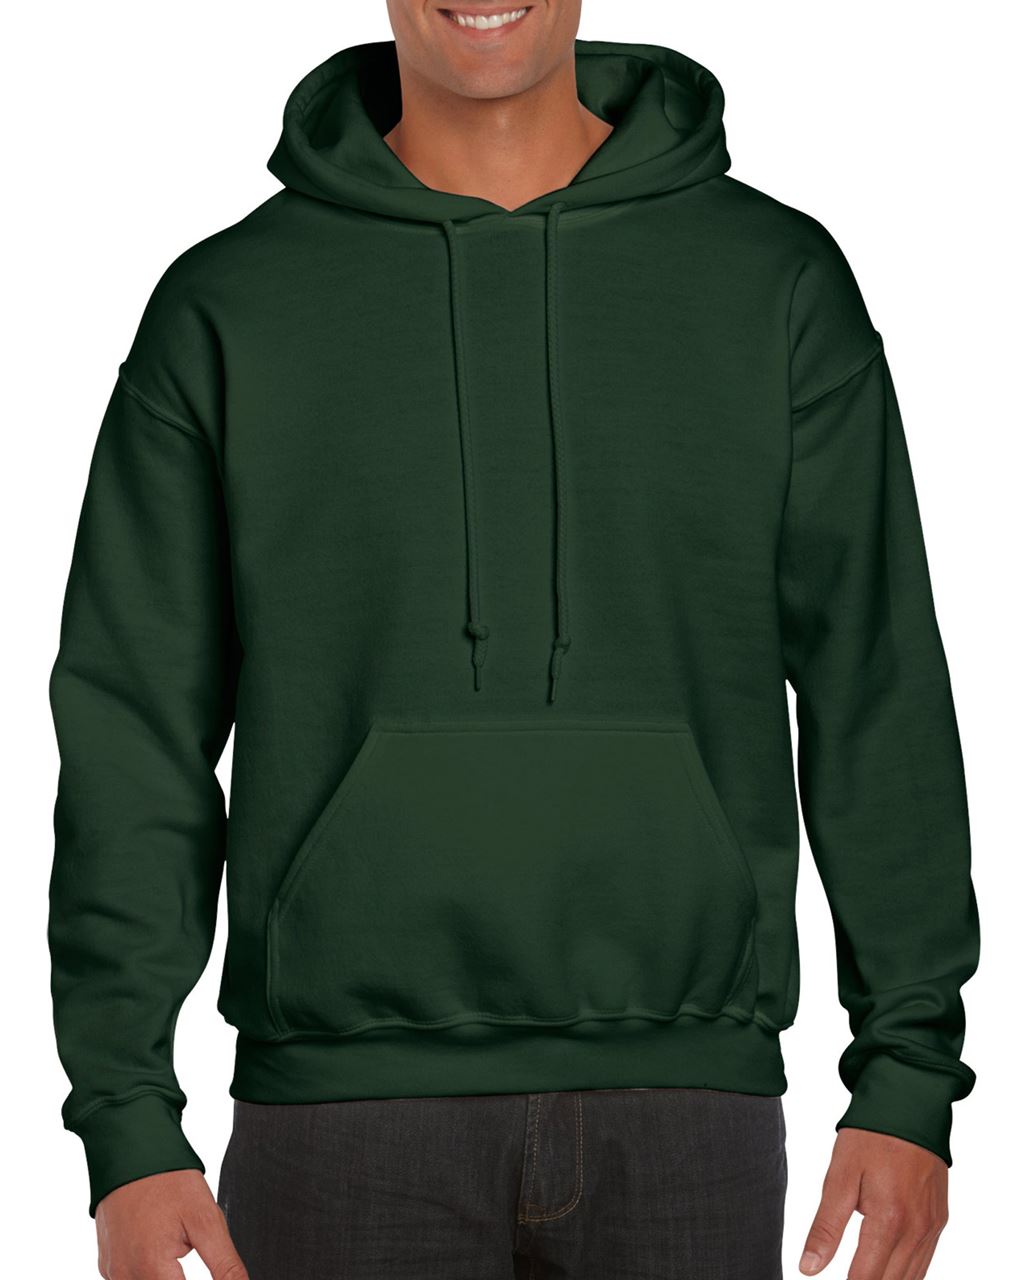 Gildan Dryblend® Adult Hooded Sweatshirt - Gildan Dryblend® Adult Hooded Sweatshirt - Forest Green